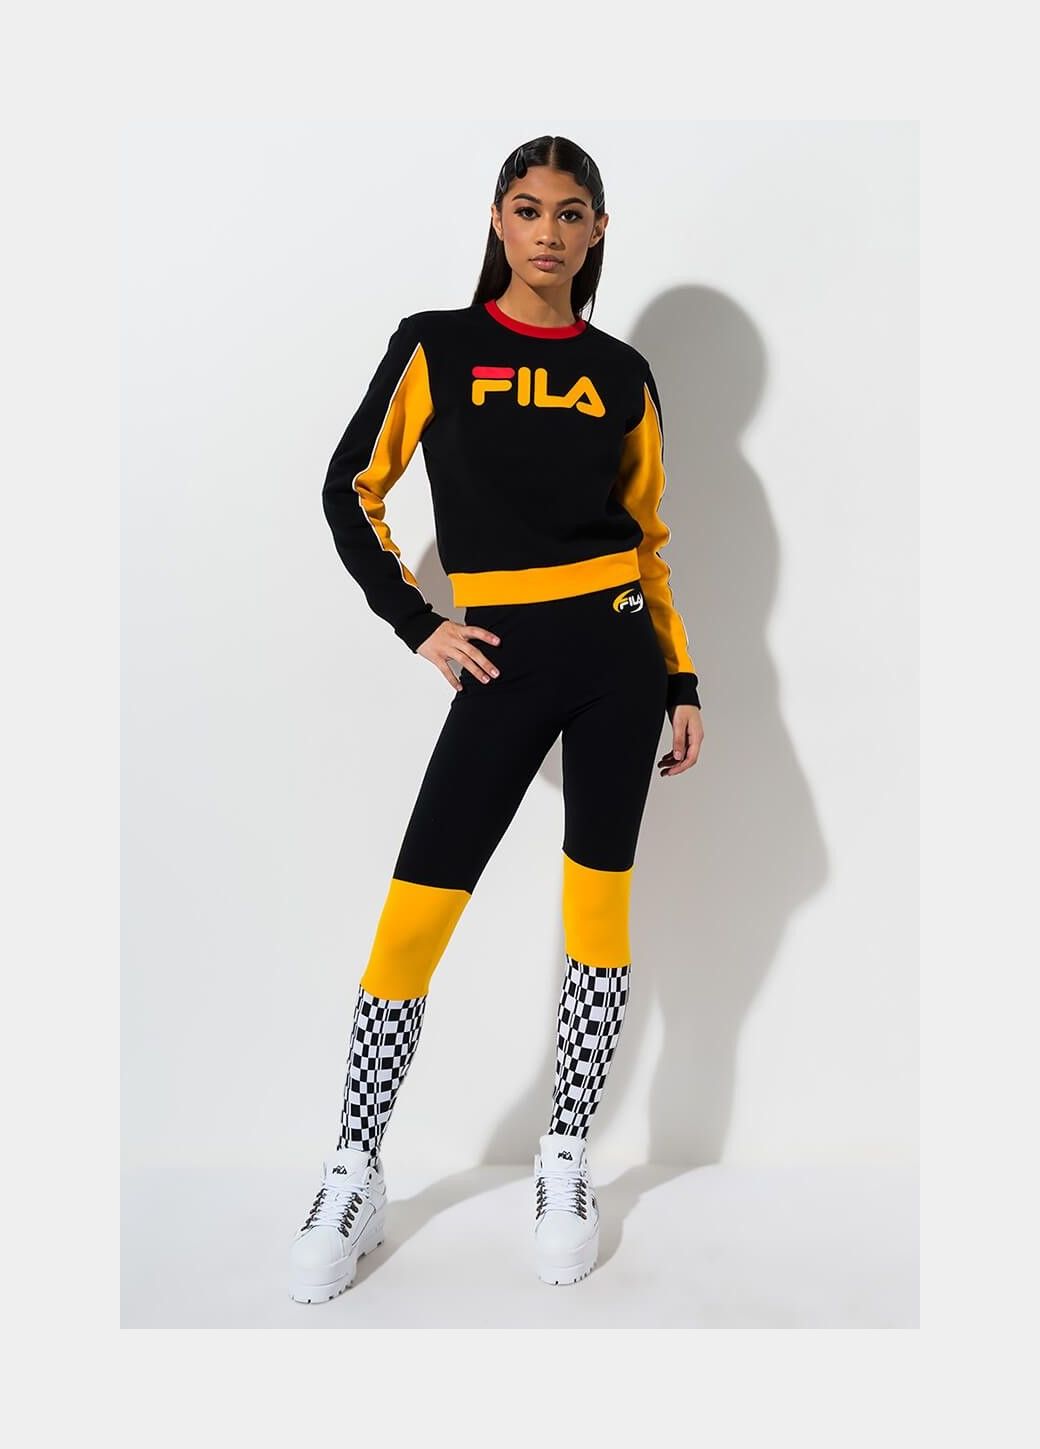 FILA Fila Fiorella High Waist Womens Leggings Black Gold LW912134